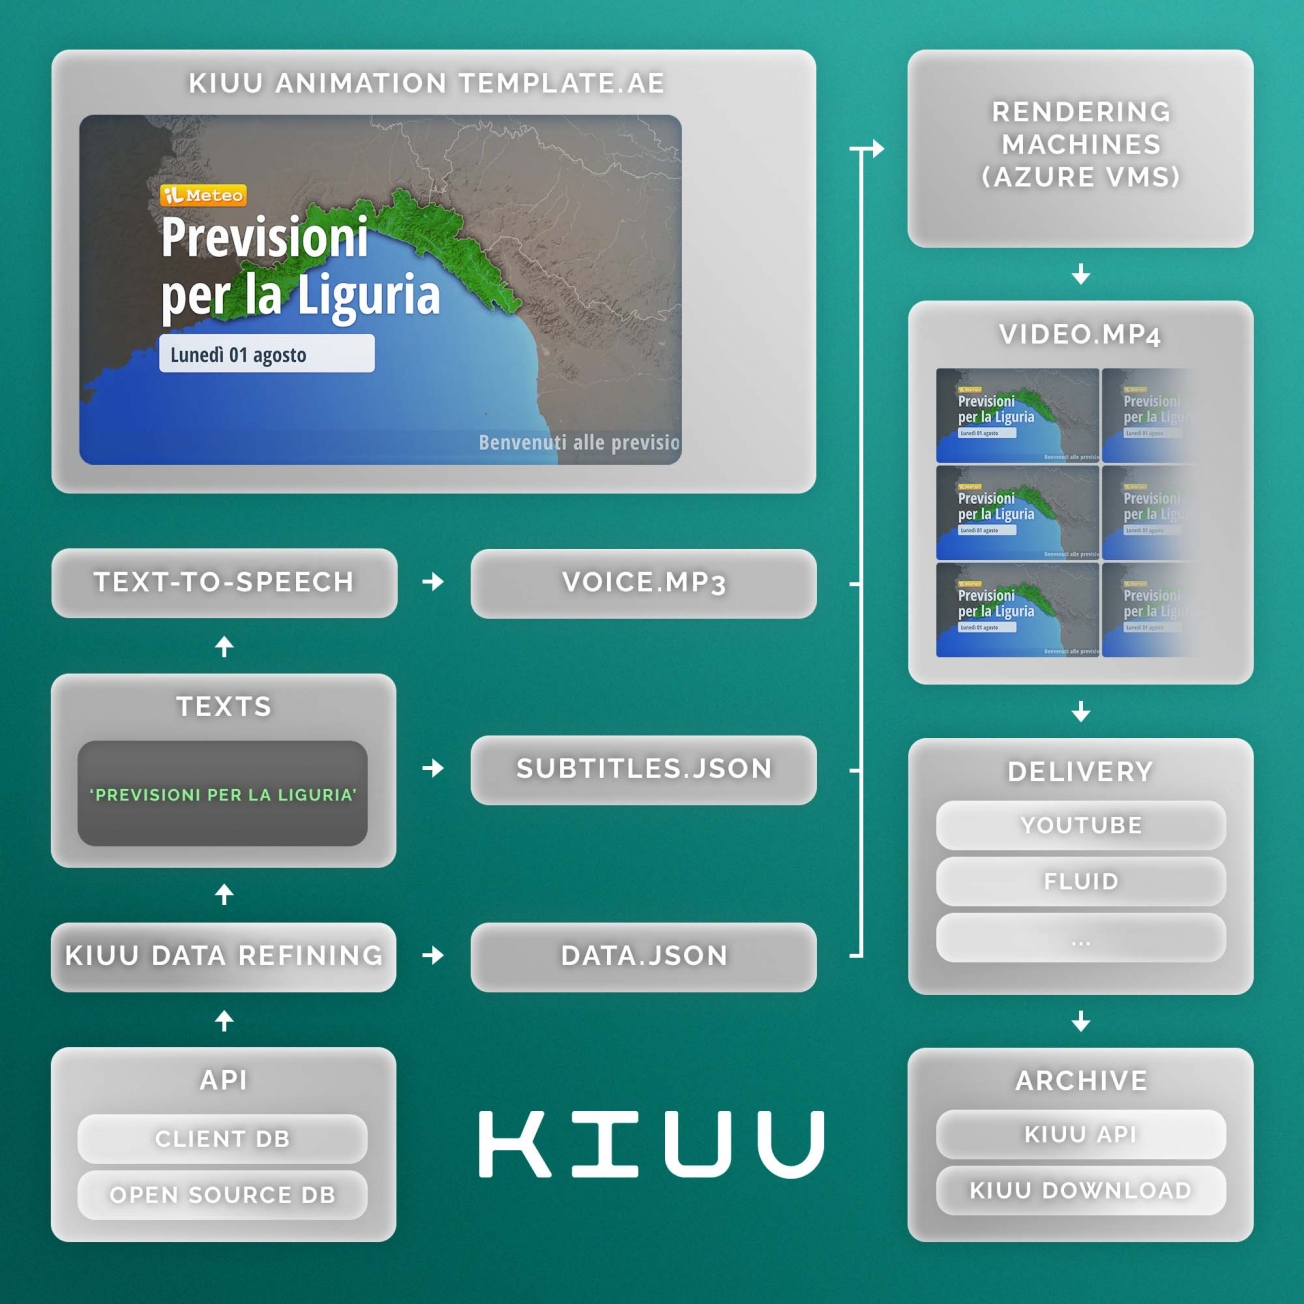 Kiuu's process production